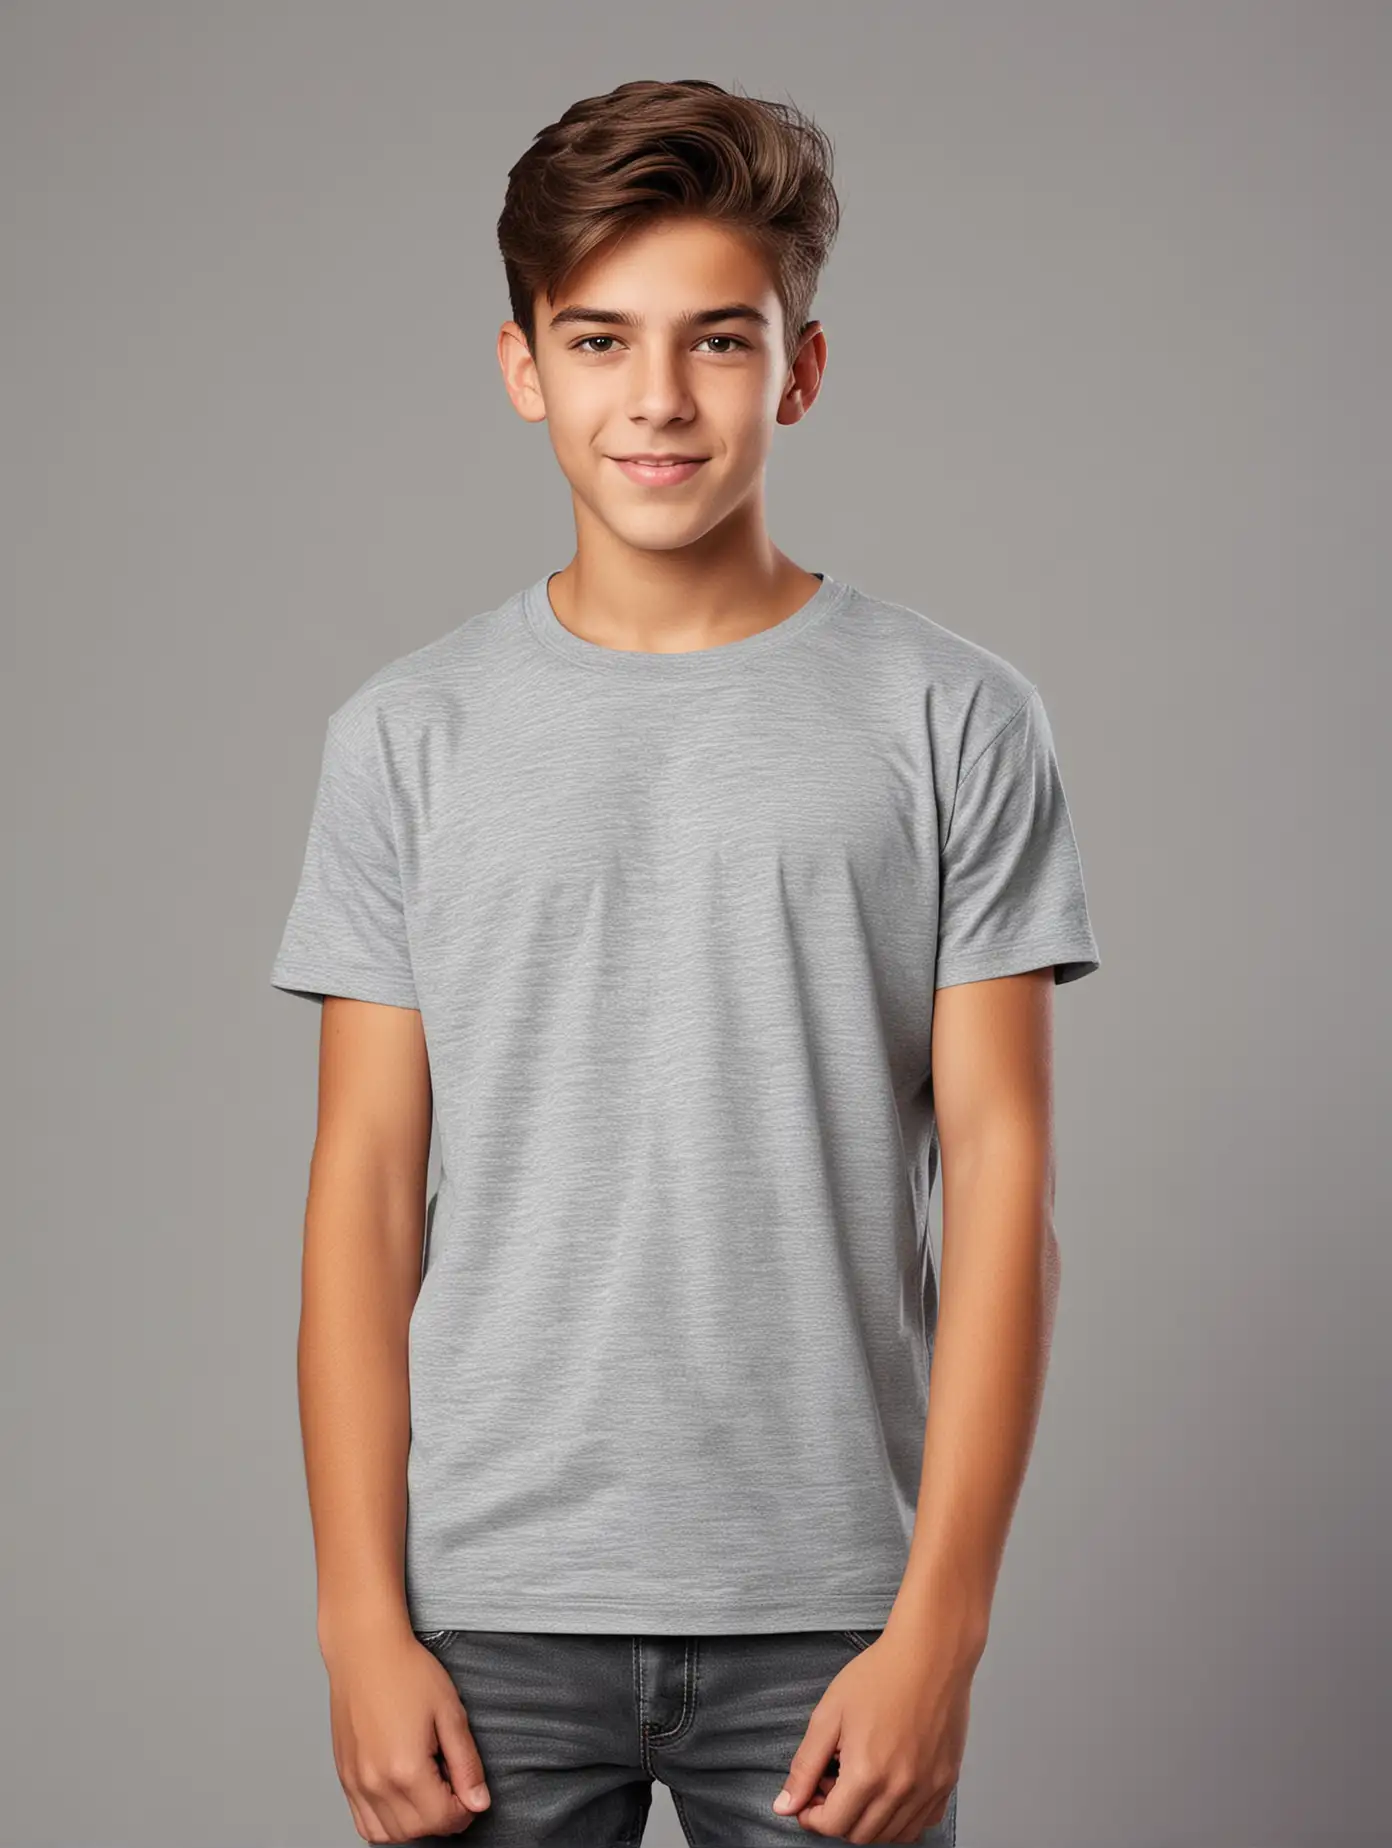 Handsome teenage boy wearing a grey t-shirt, causual look